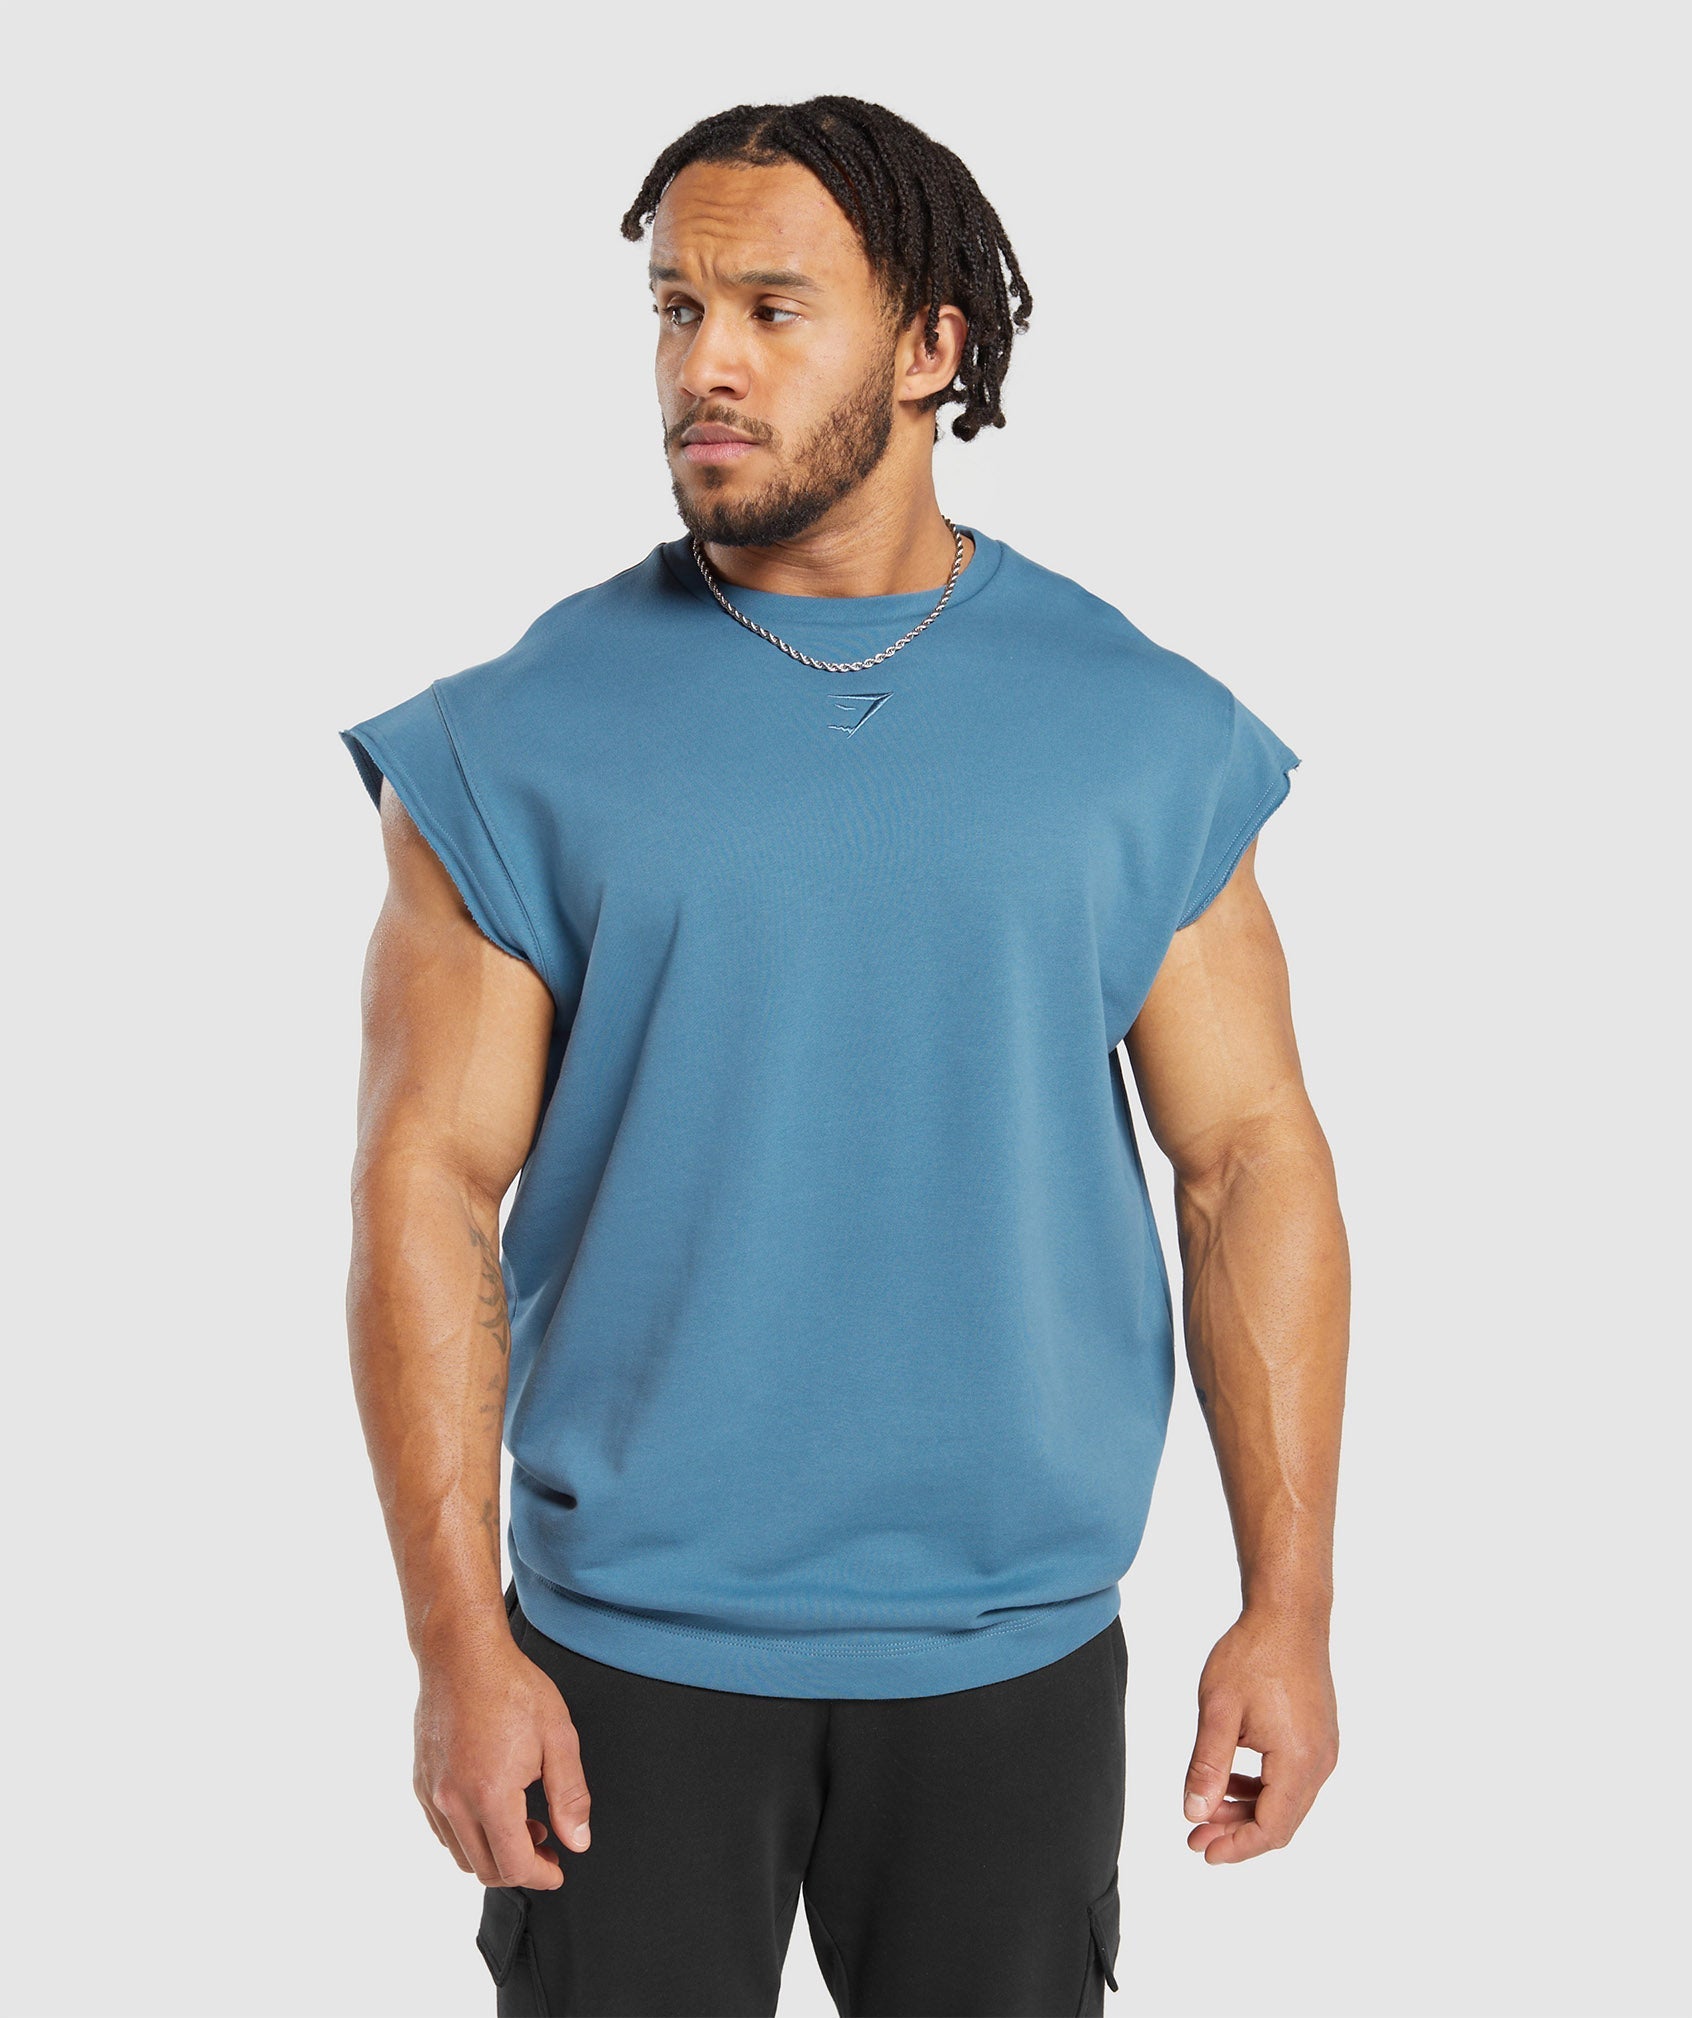 Super Natural Cut Off T-Shirt in Faded Blue